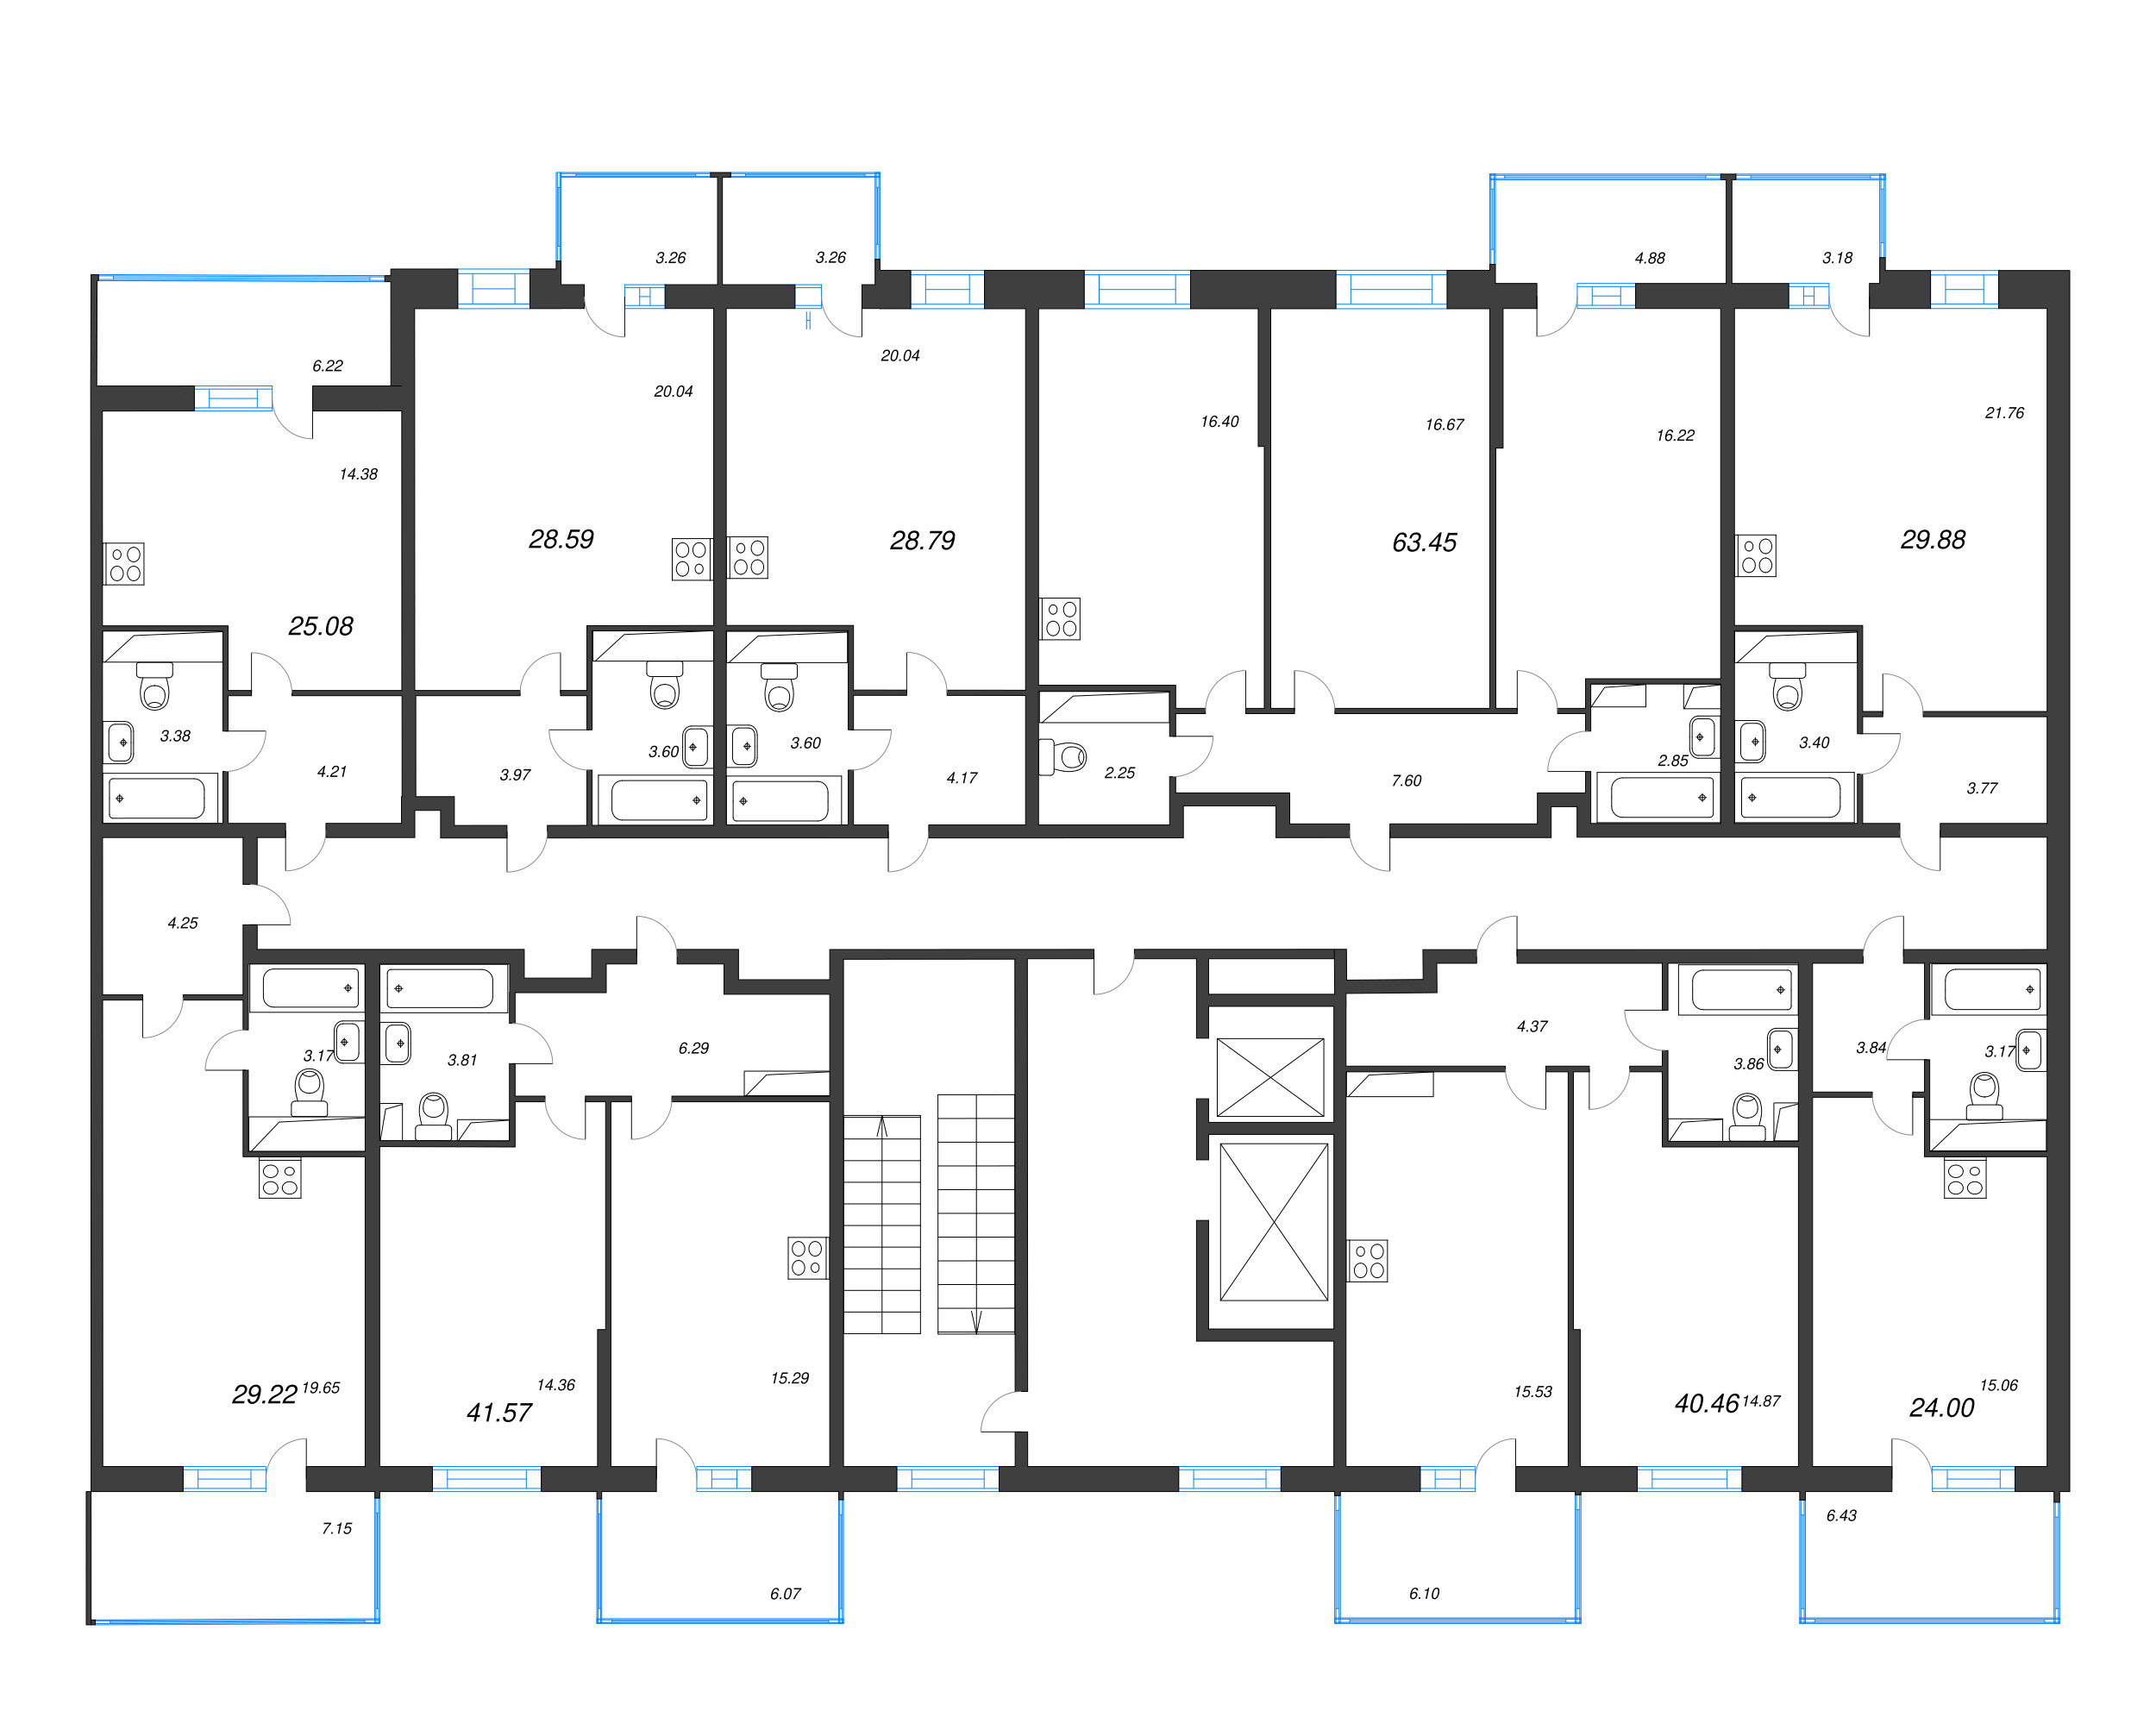 2-комнатная (Евро) квартира, 40.46 м² - планировка этажа